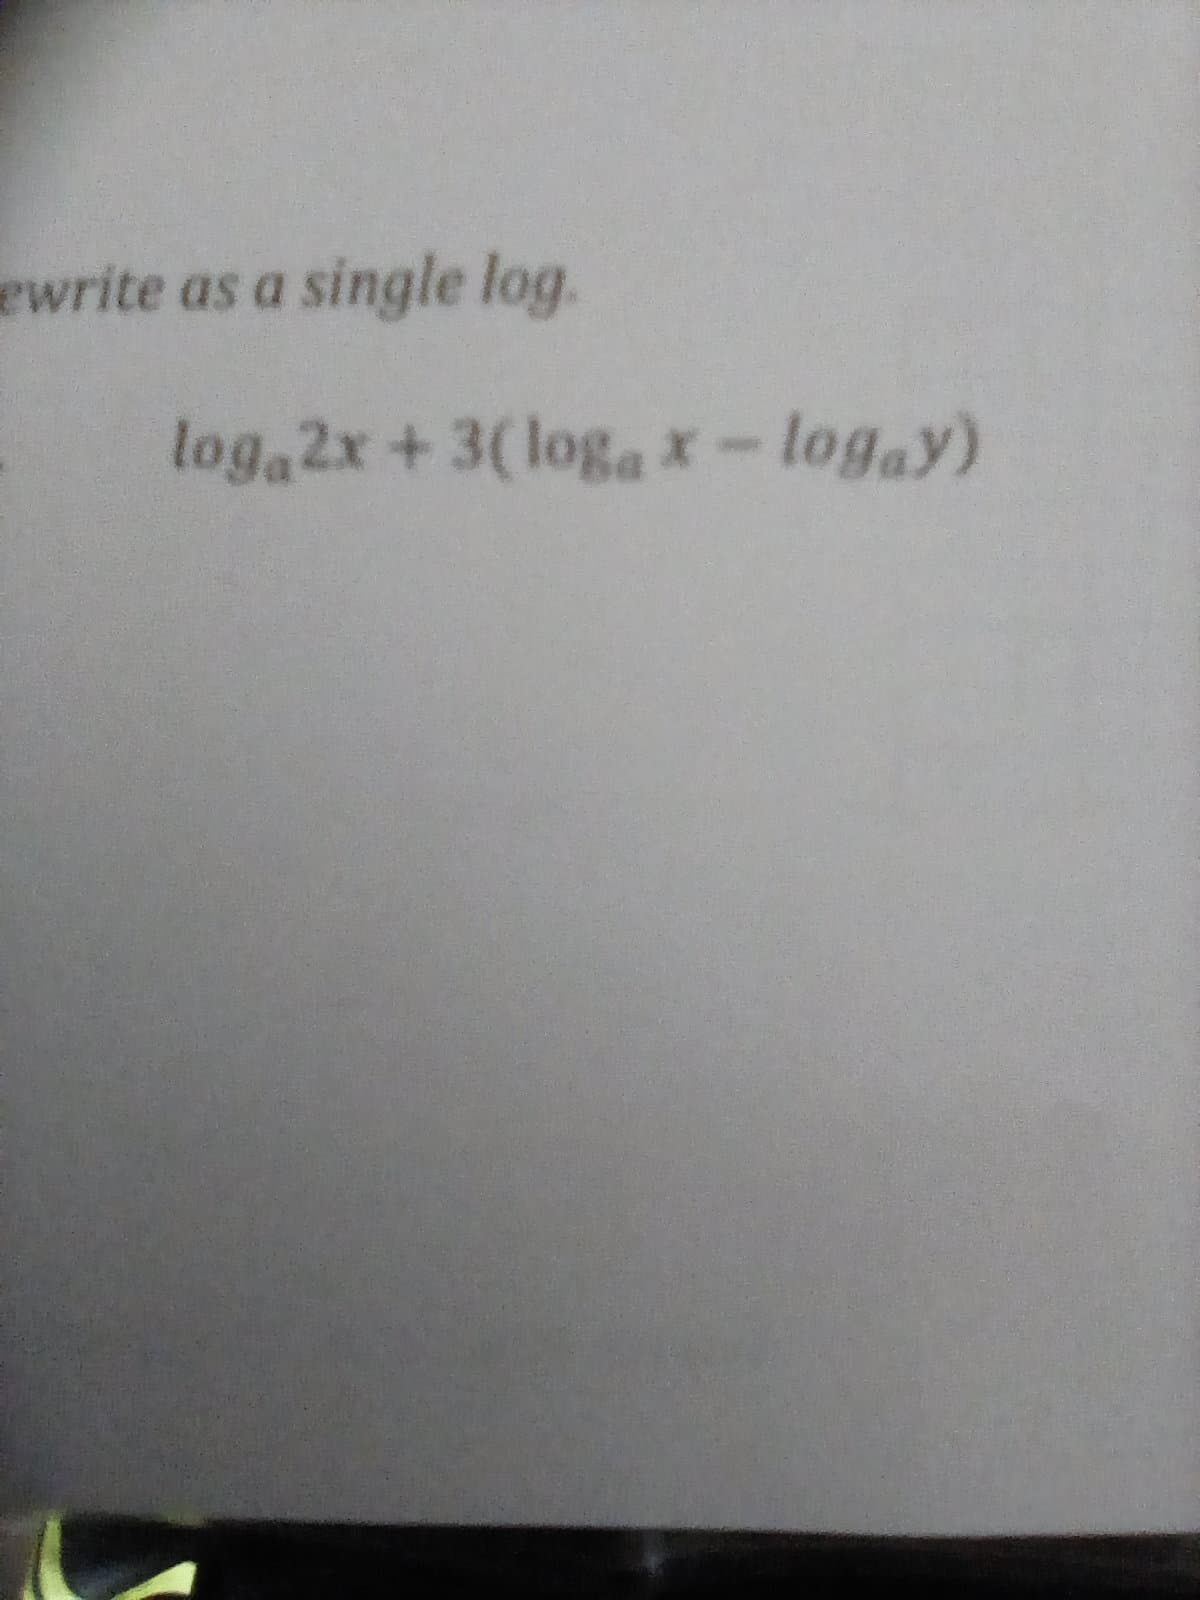 ewrite as a single log.
log,2x+3(loga X- log.y)
